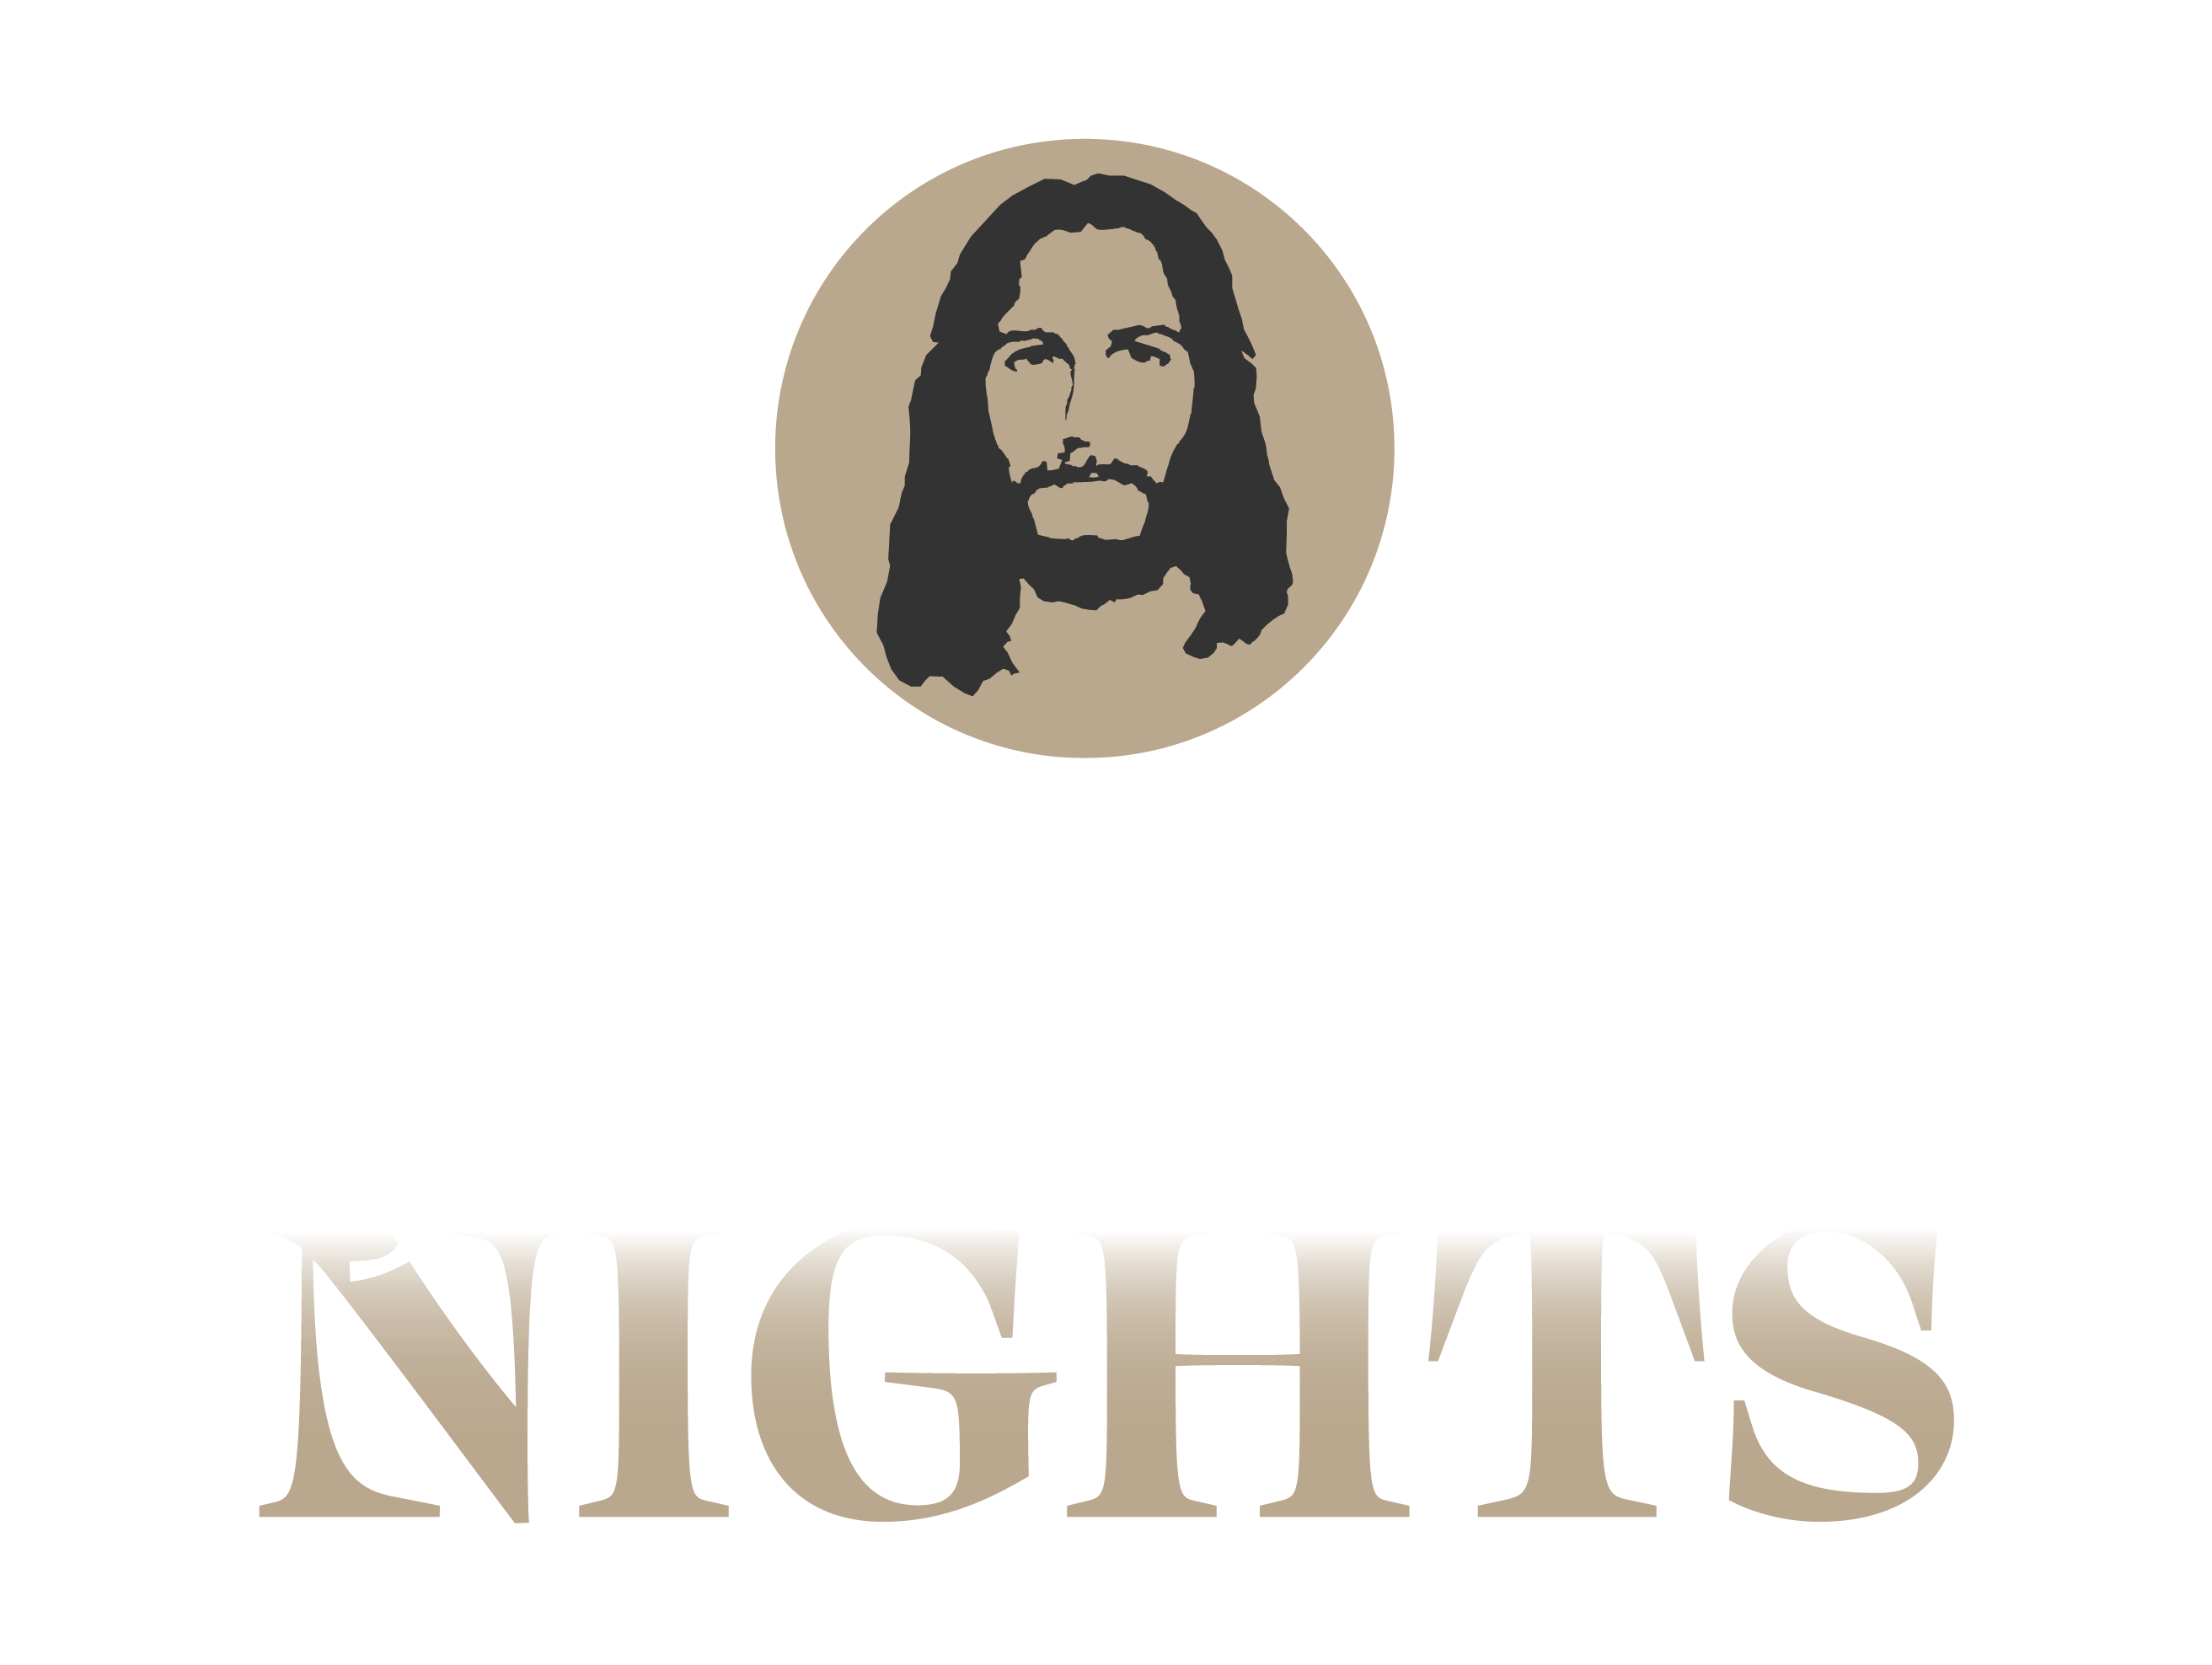 Jesus Logo